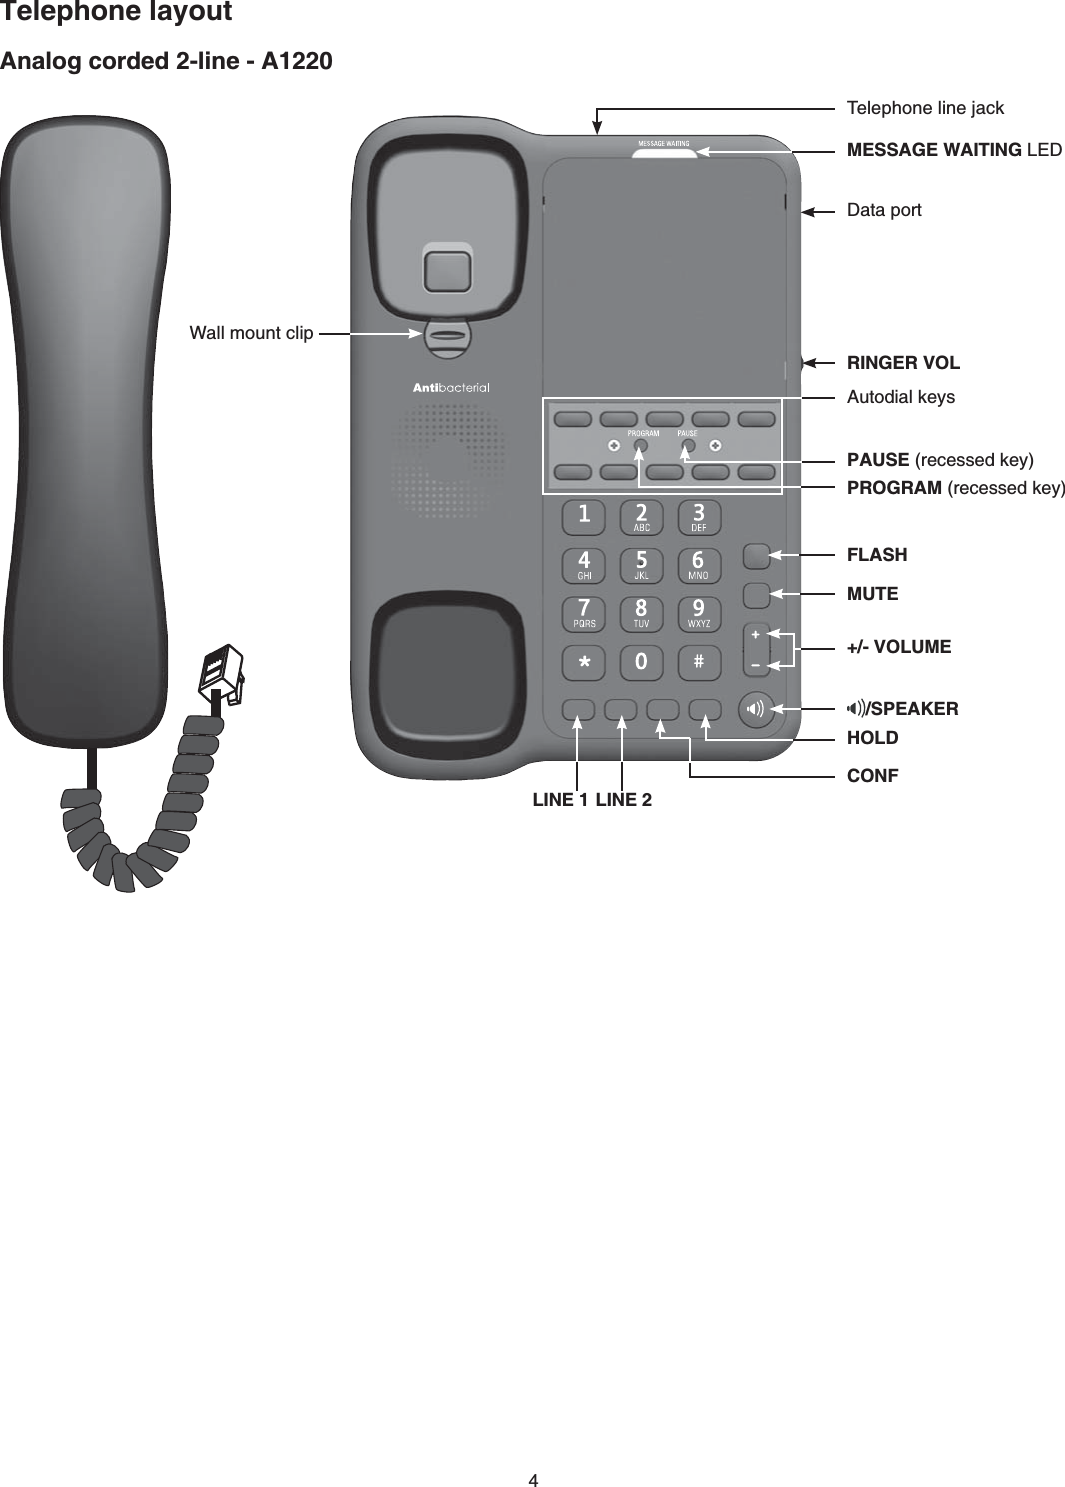 4Analog corded 2-line - A1220Telephone layoutWall mount clipLINE 1 LINE 2CONFHOLD+/- VOLUMEMUTEFLASHPROGRAM (recessed key)PAUSE (recessed key)Autodial keys&amp;CVCRQTVMESSAGE WAITING.&apos;&amp;Telephone line jackRINGER VOL/SPEAKER